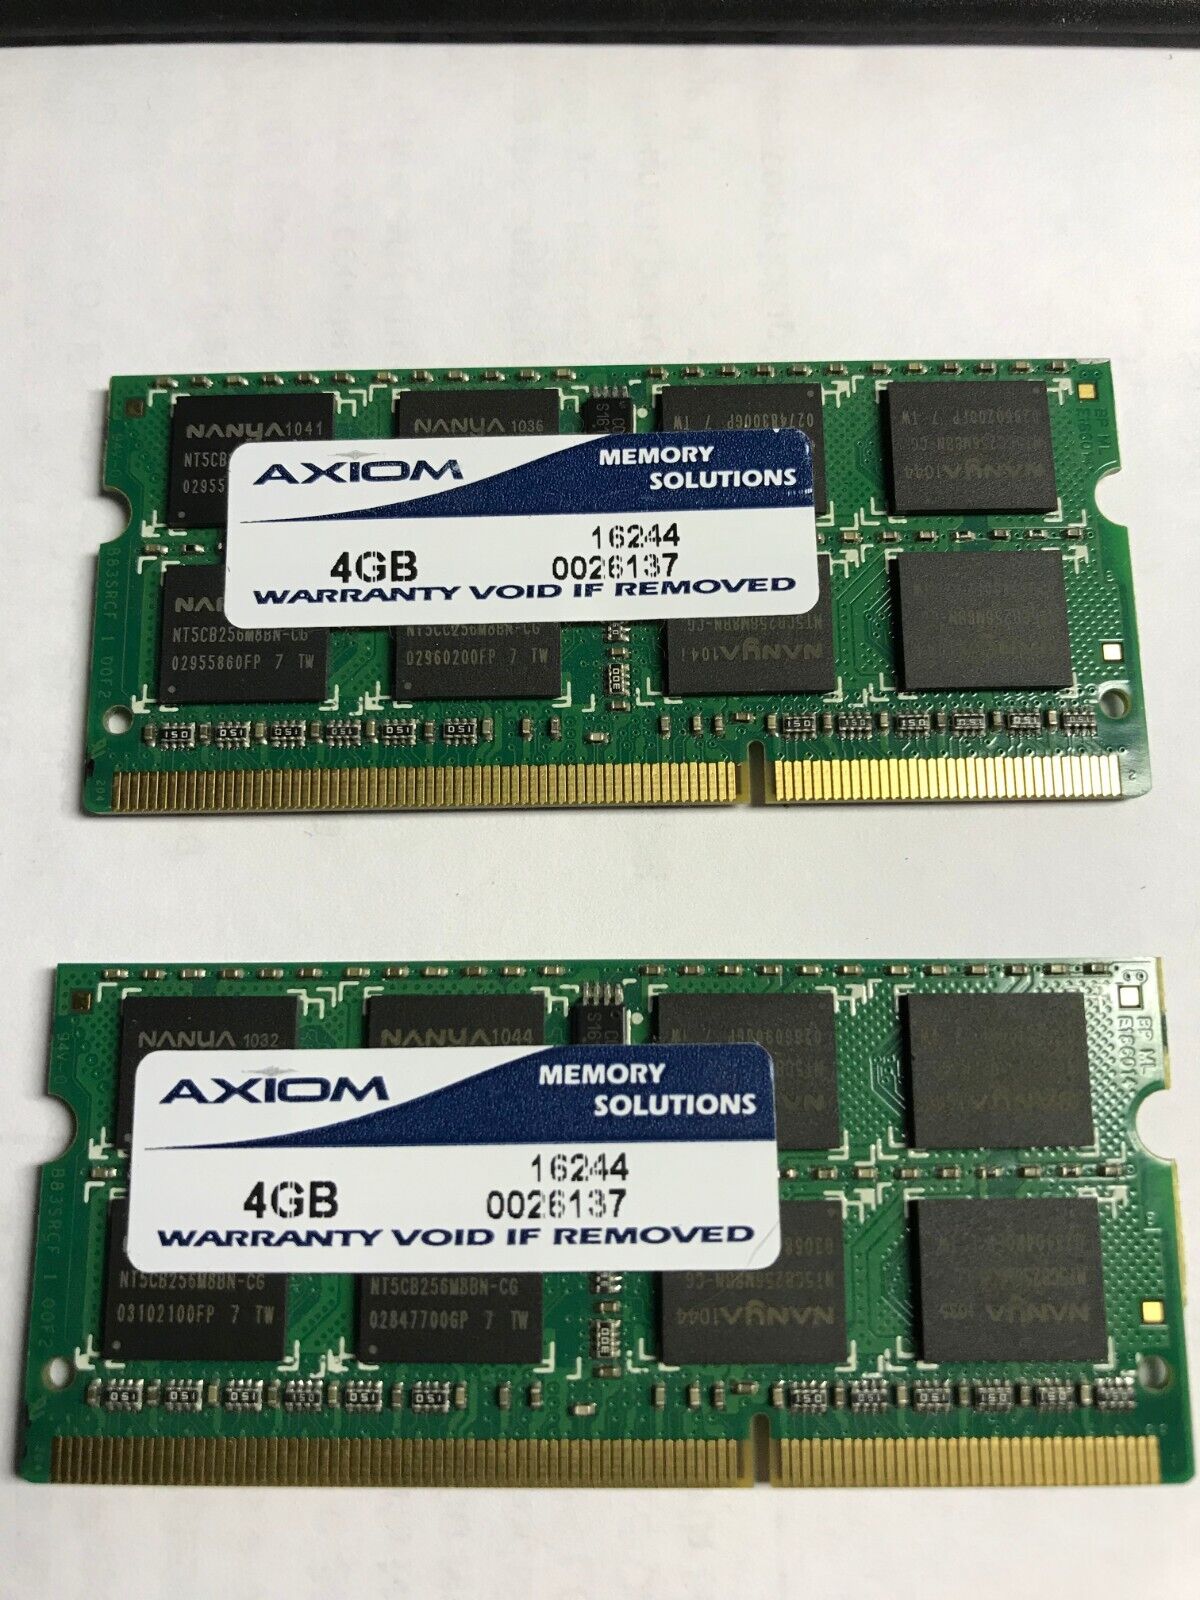 Axiom Laptop Memory SODIMM 4GB 16244 0026137 Apple Macbook two 